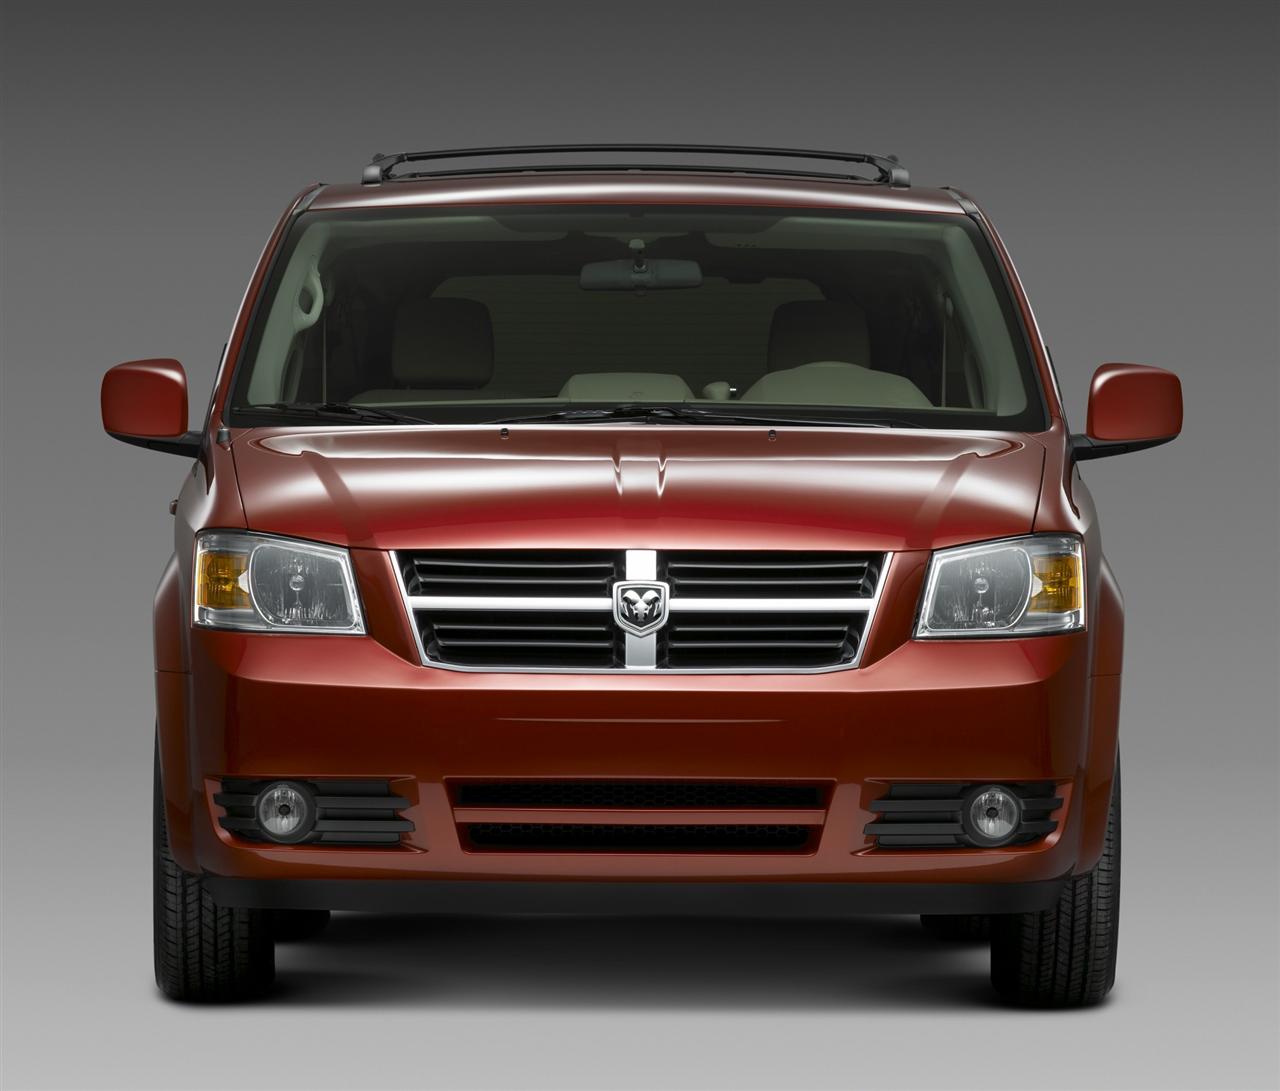 2009 Dodge Grand Caravan